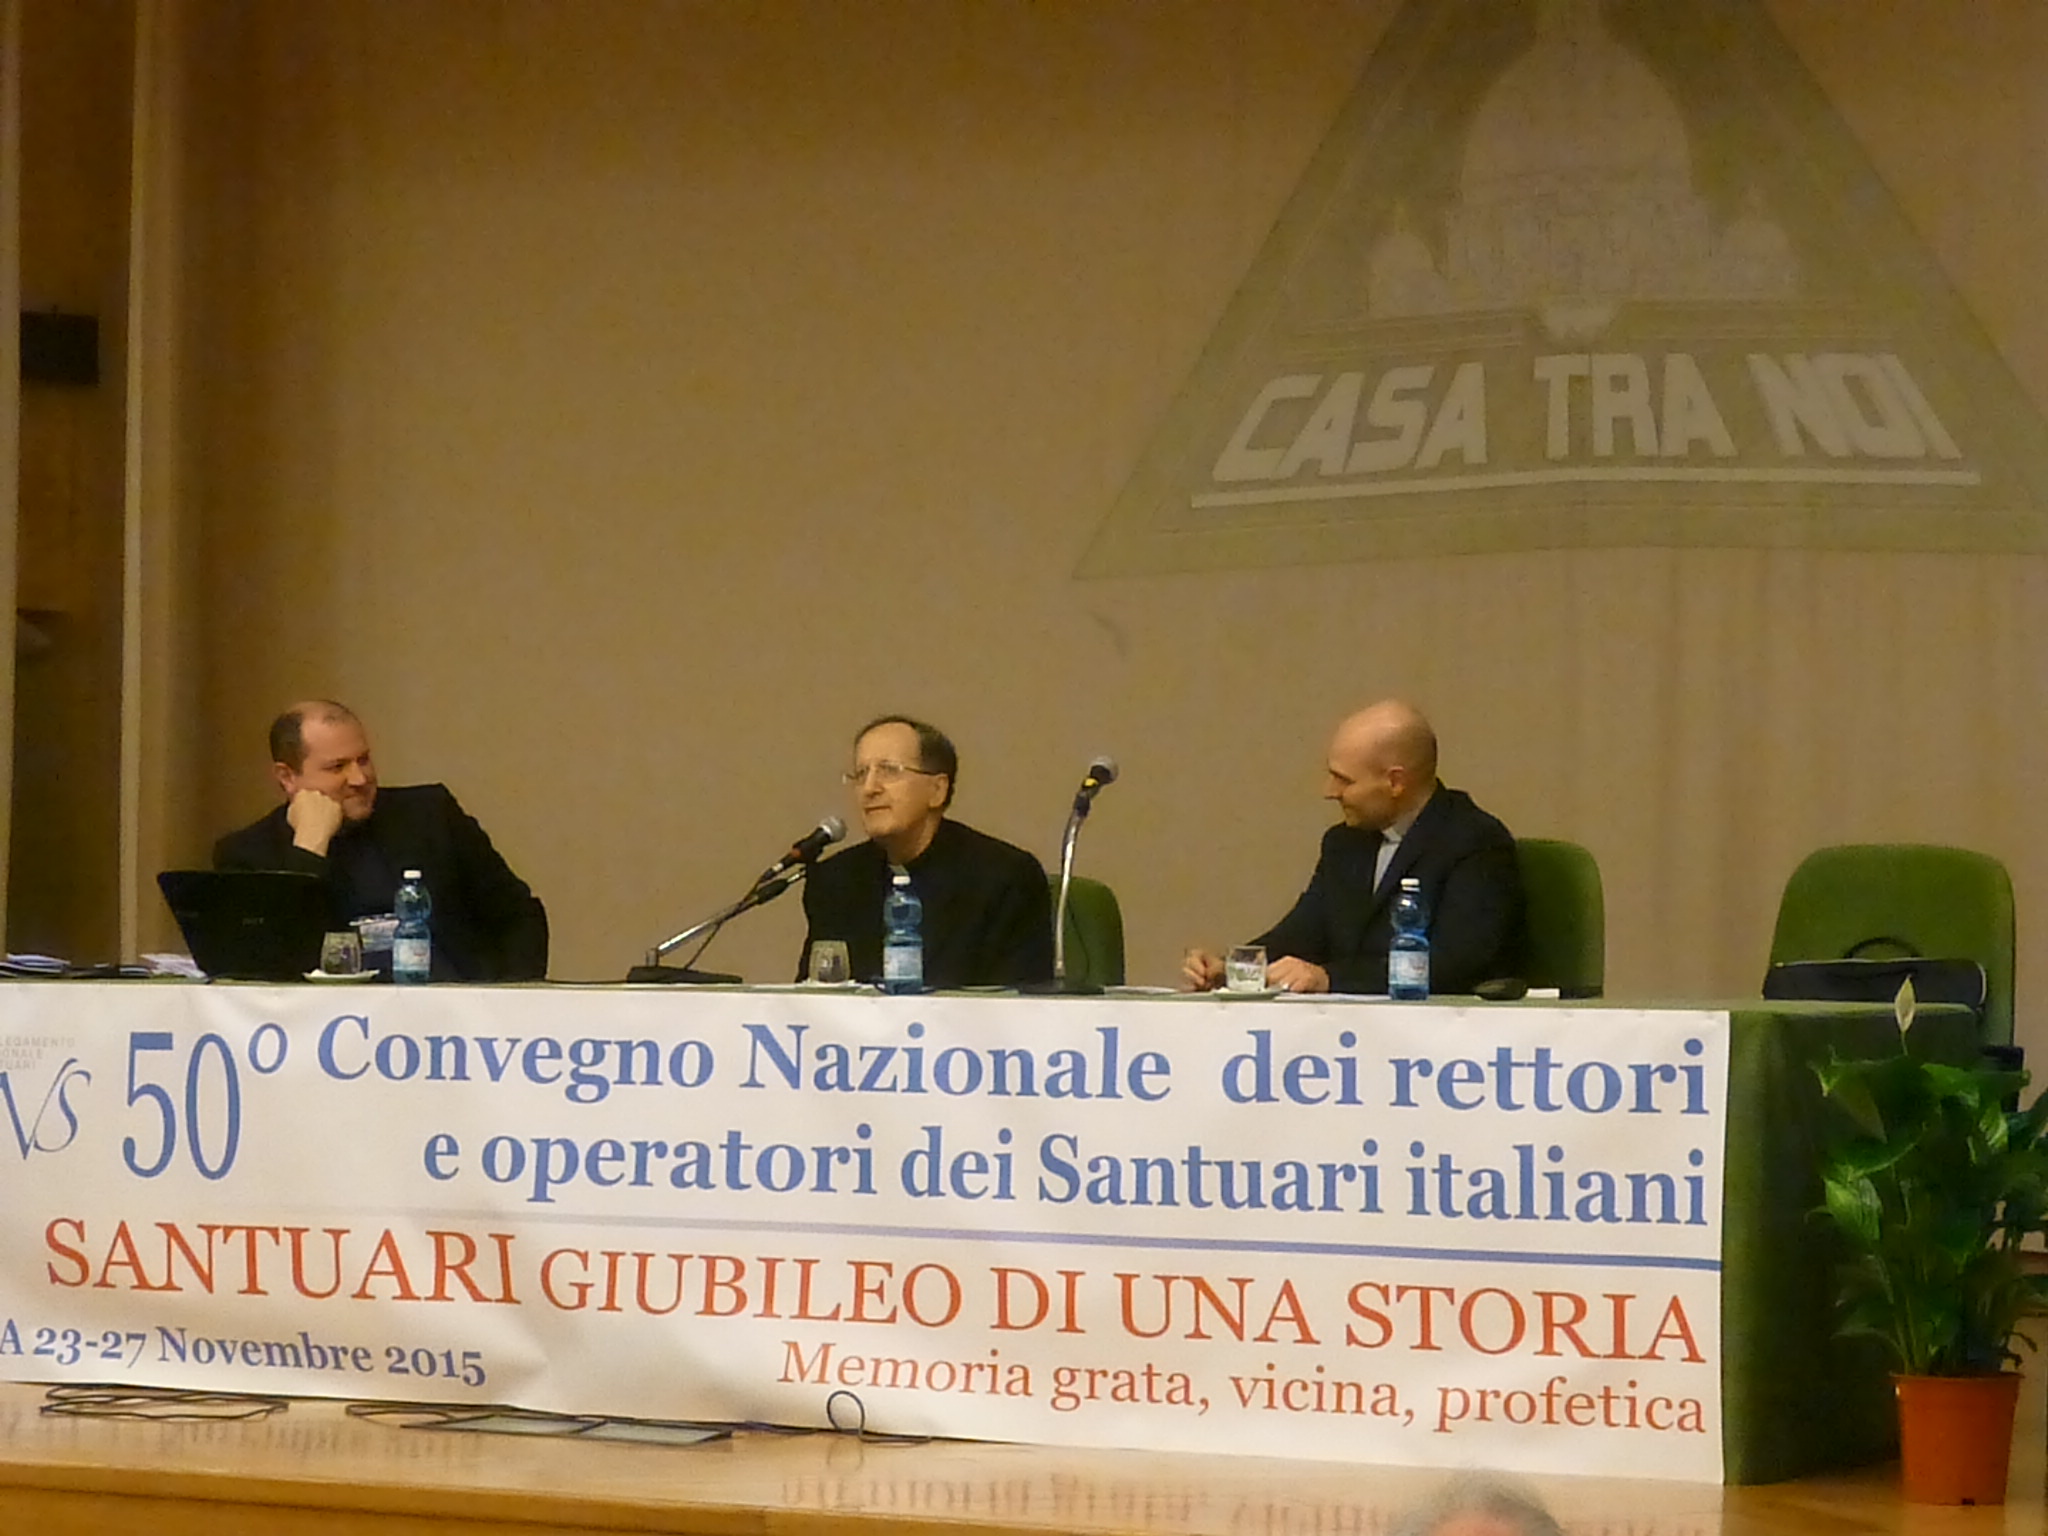 Cardinal Beniamino Stella at congress of italian sanctuaries